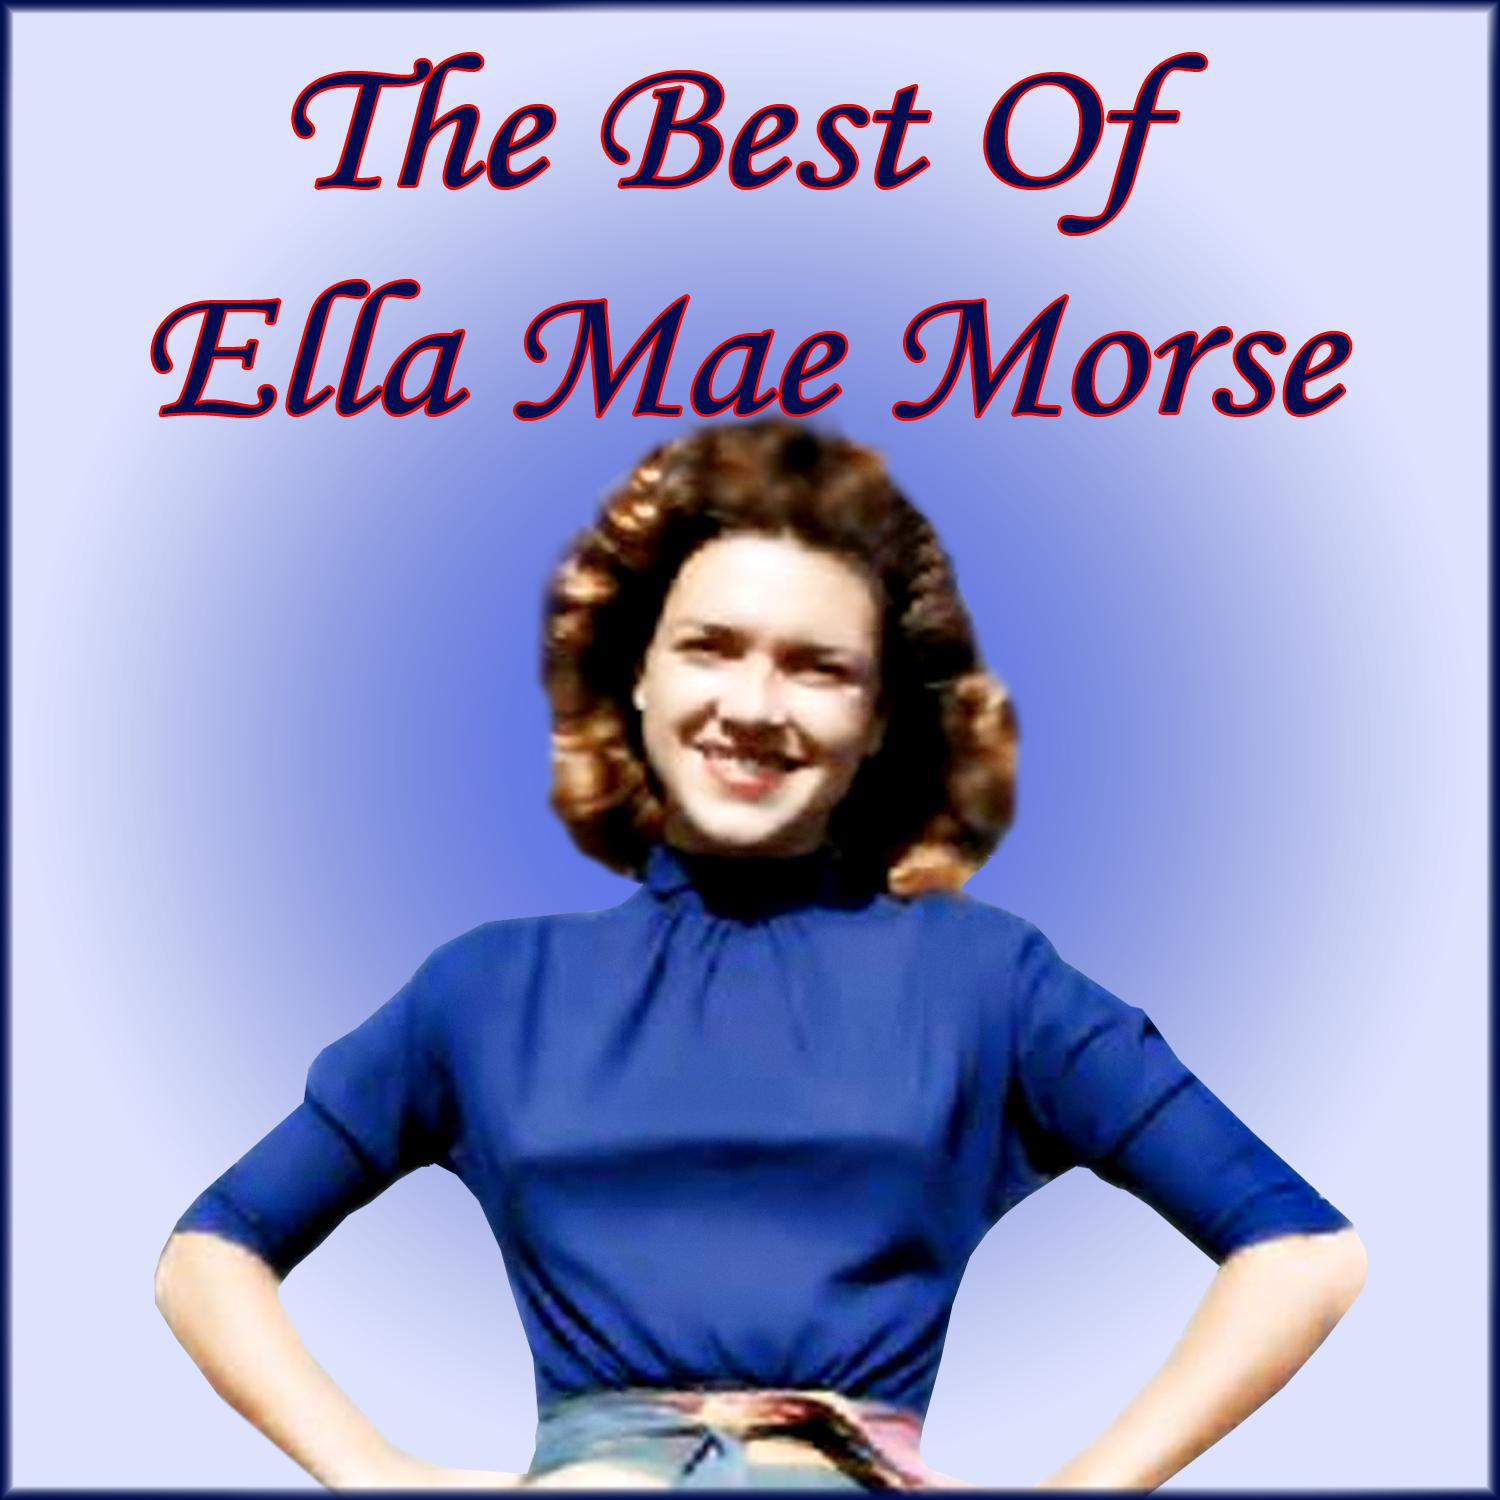 The Best Of Ella Mae Morse